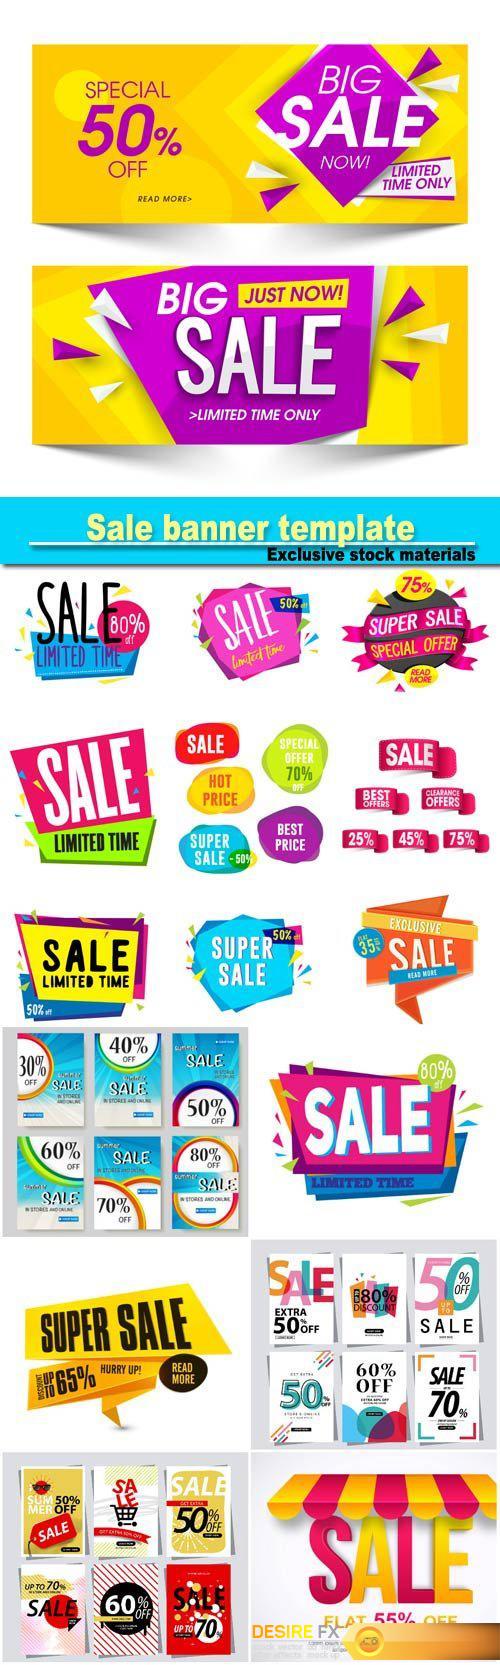 Sale banner template, sale sticker or label